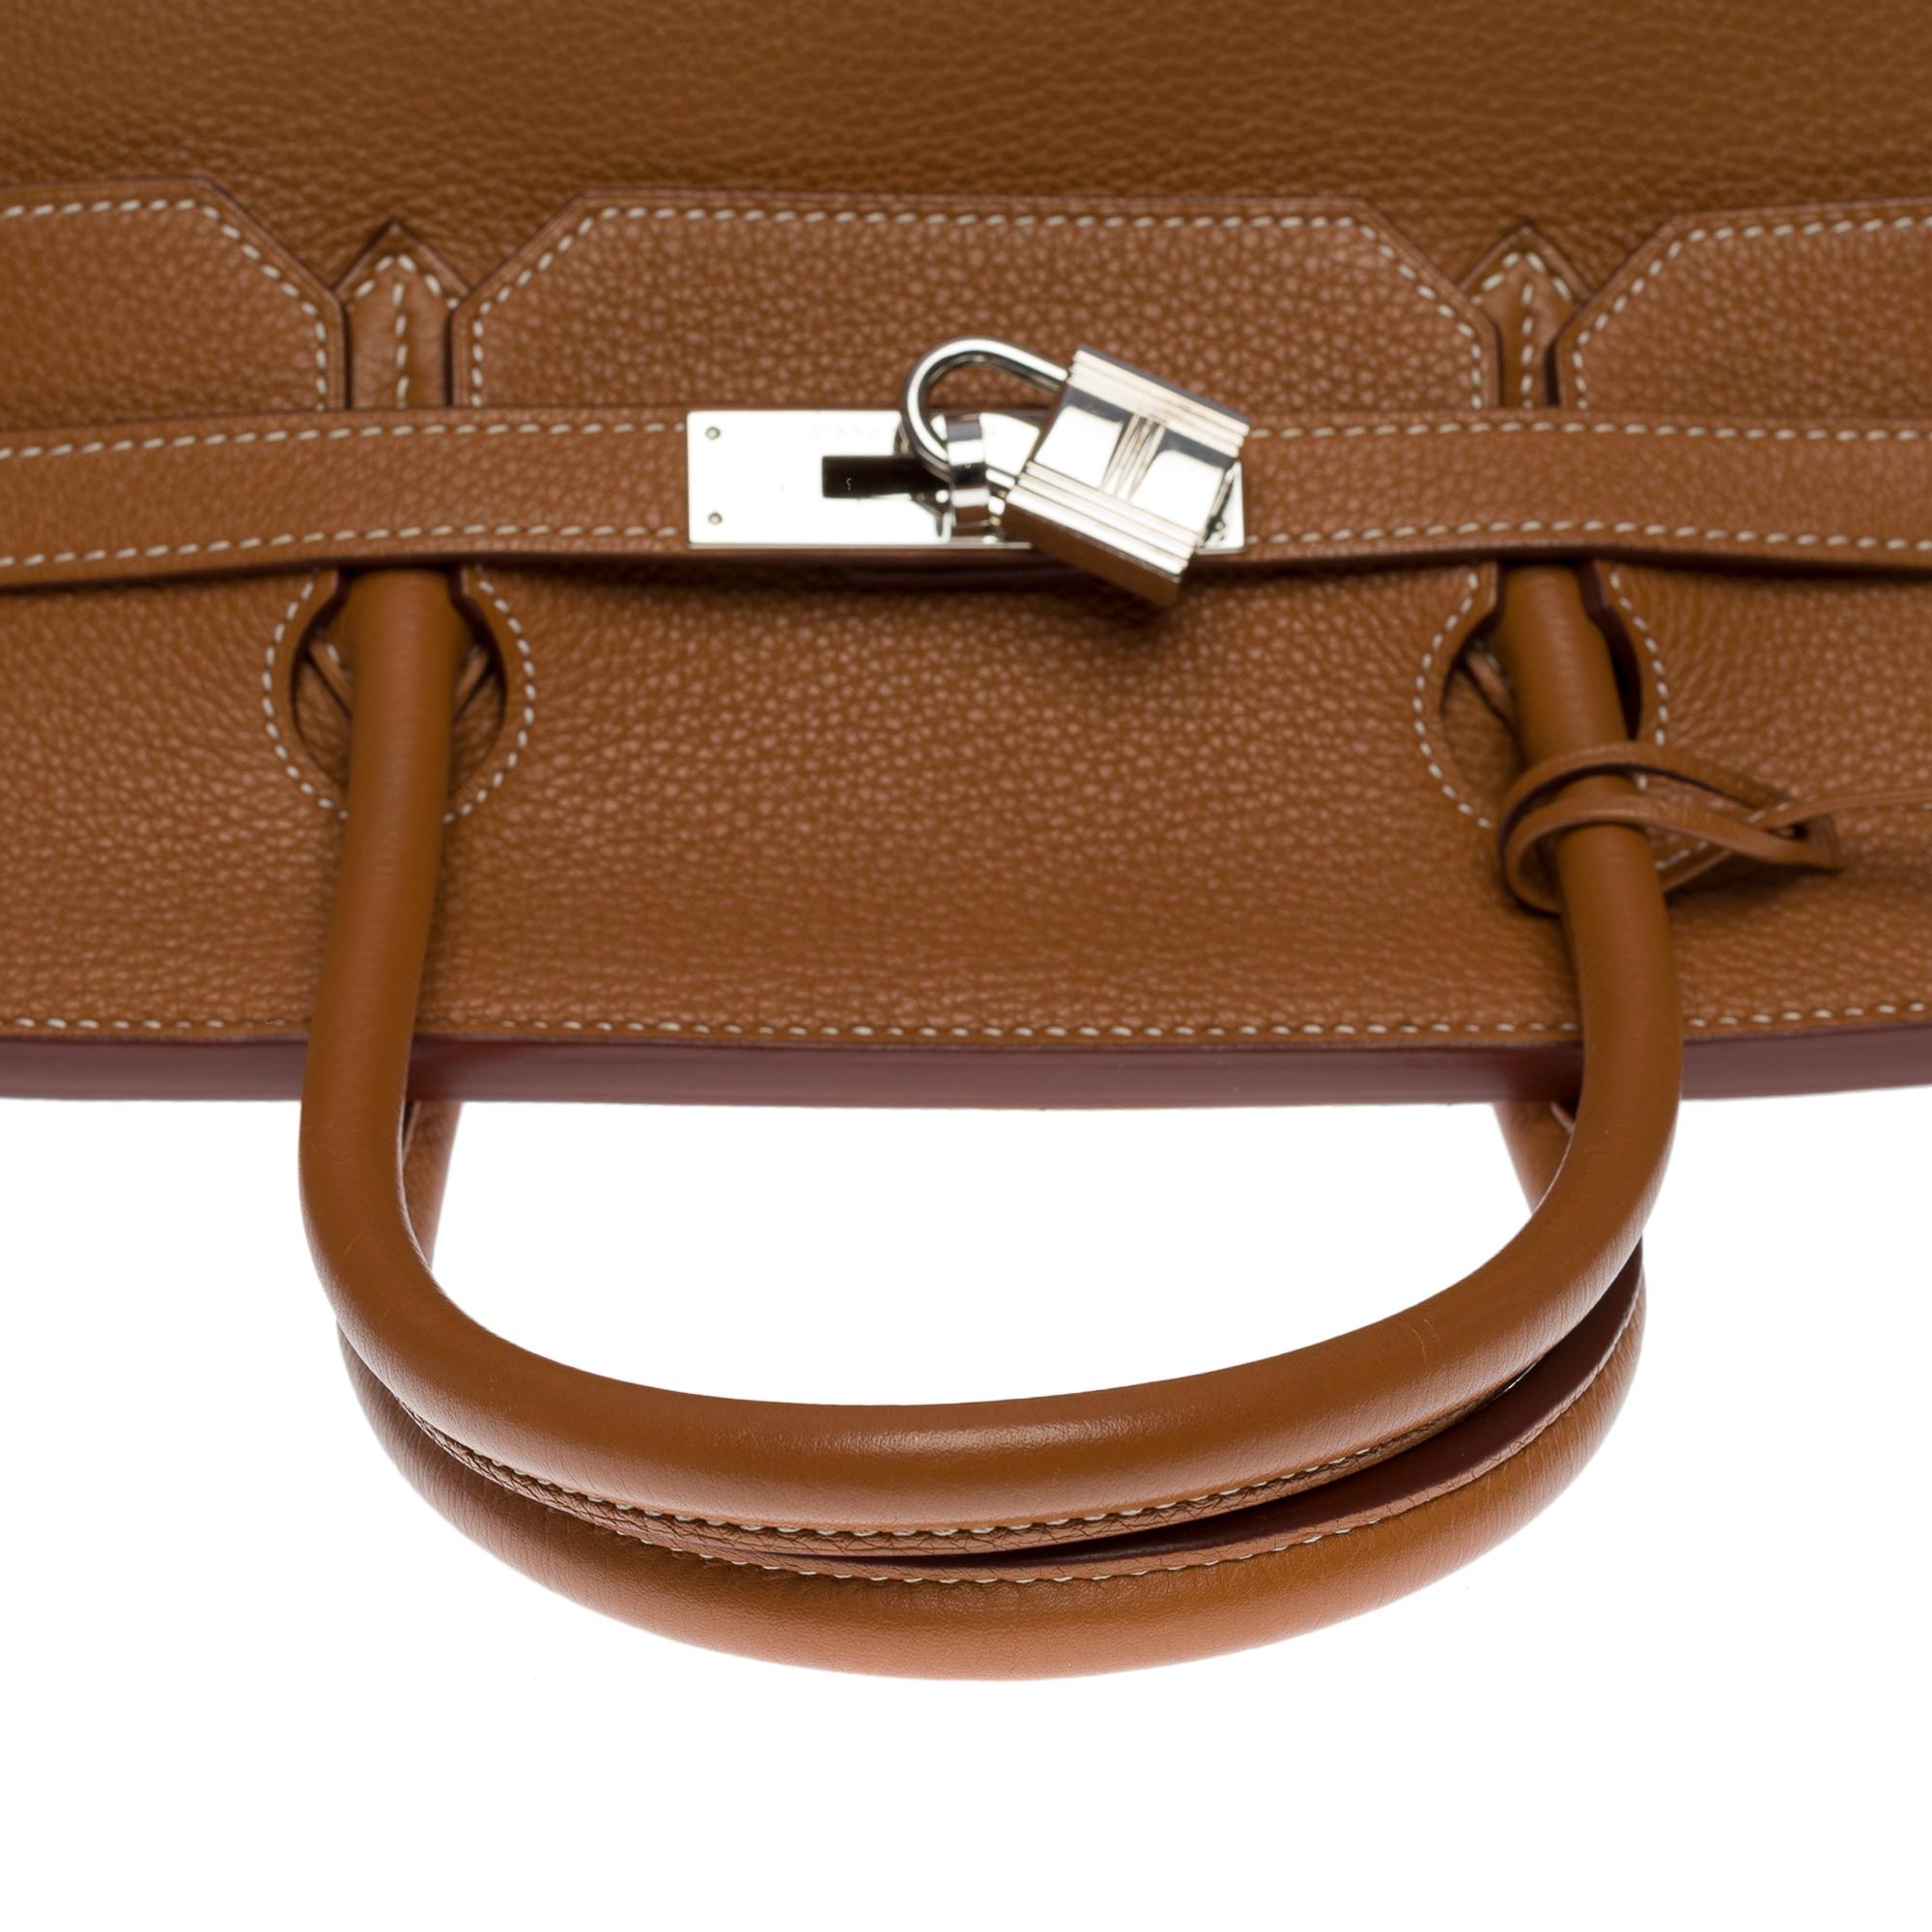 Stunning Hermes Birkin 40cm handbag in Camel Togo leather, SHW 2